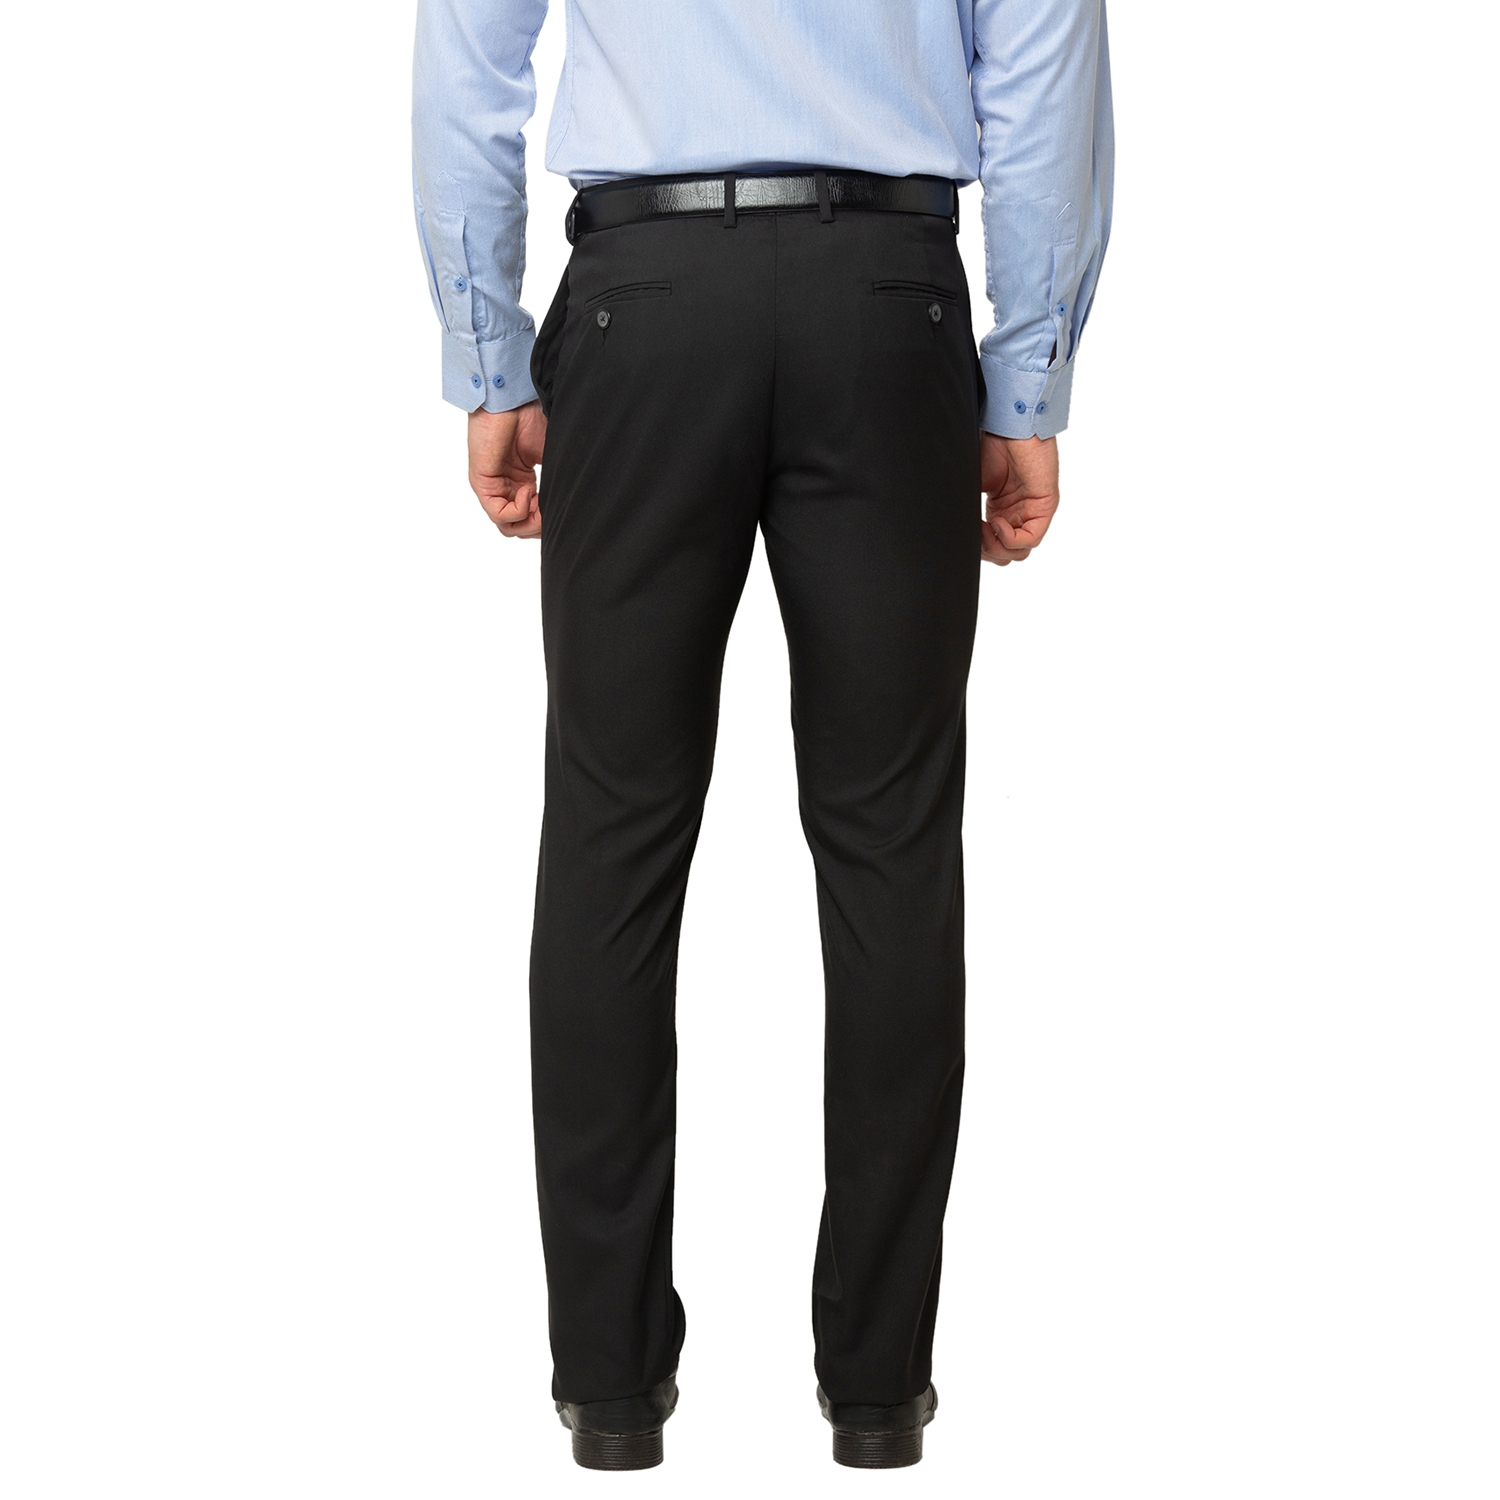 globus | Men's Black Cotton Blend Solid Formal Trousers 2